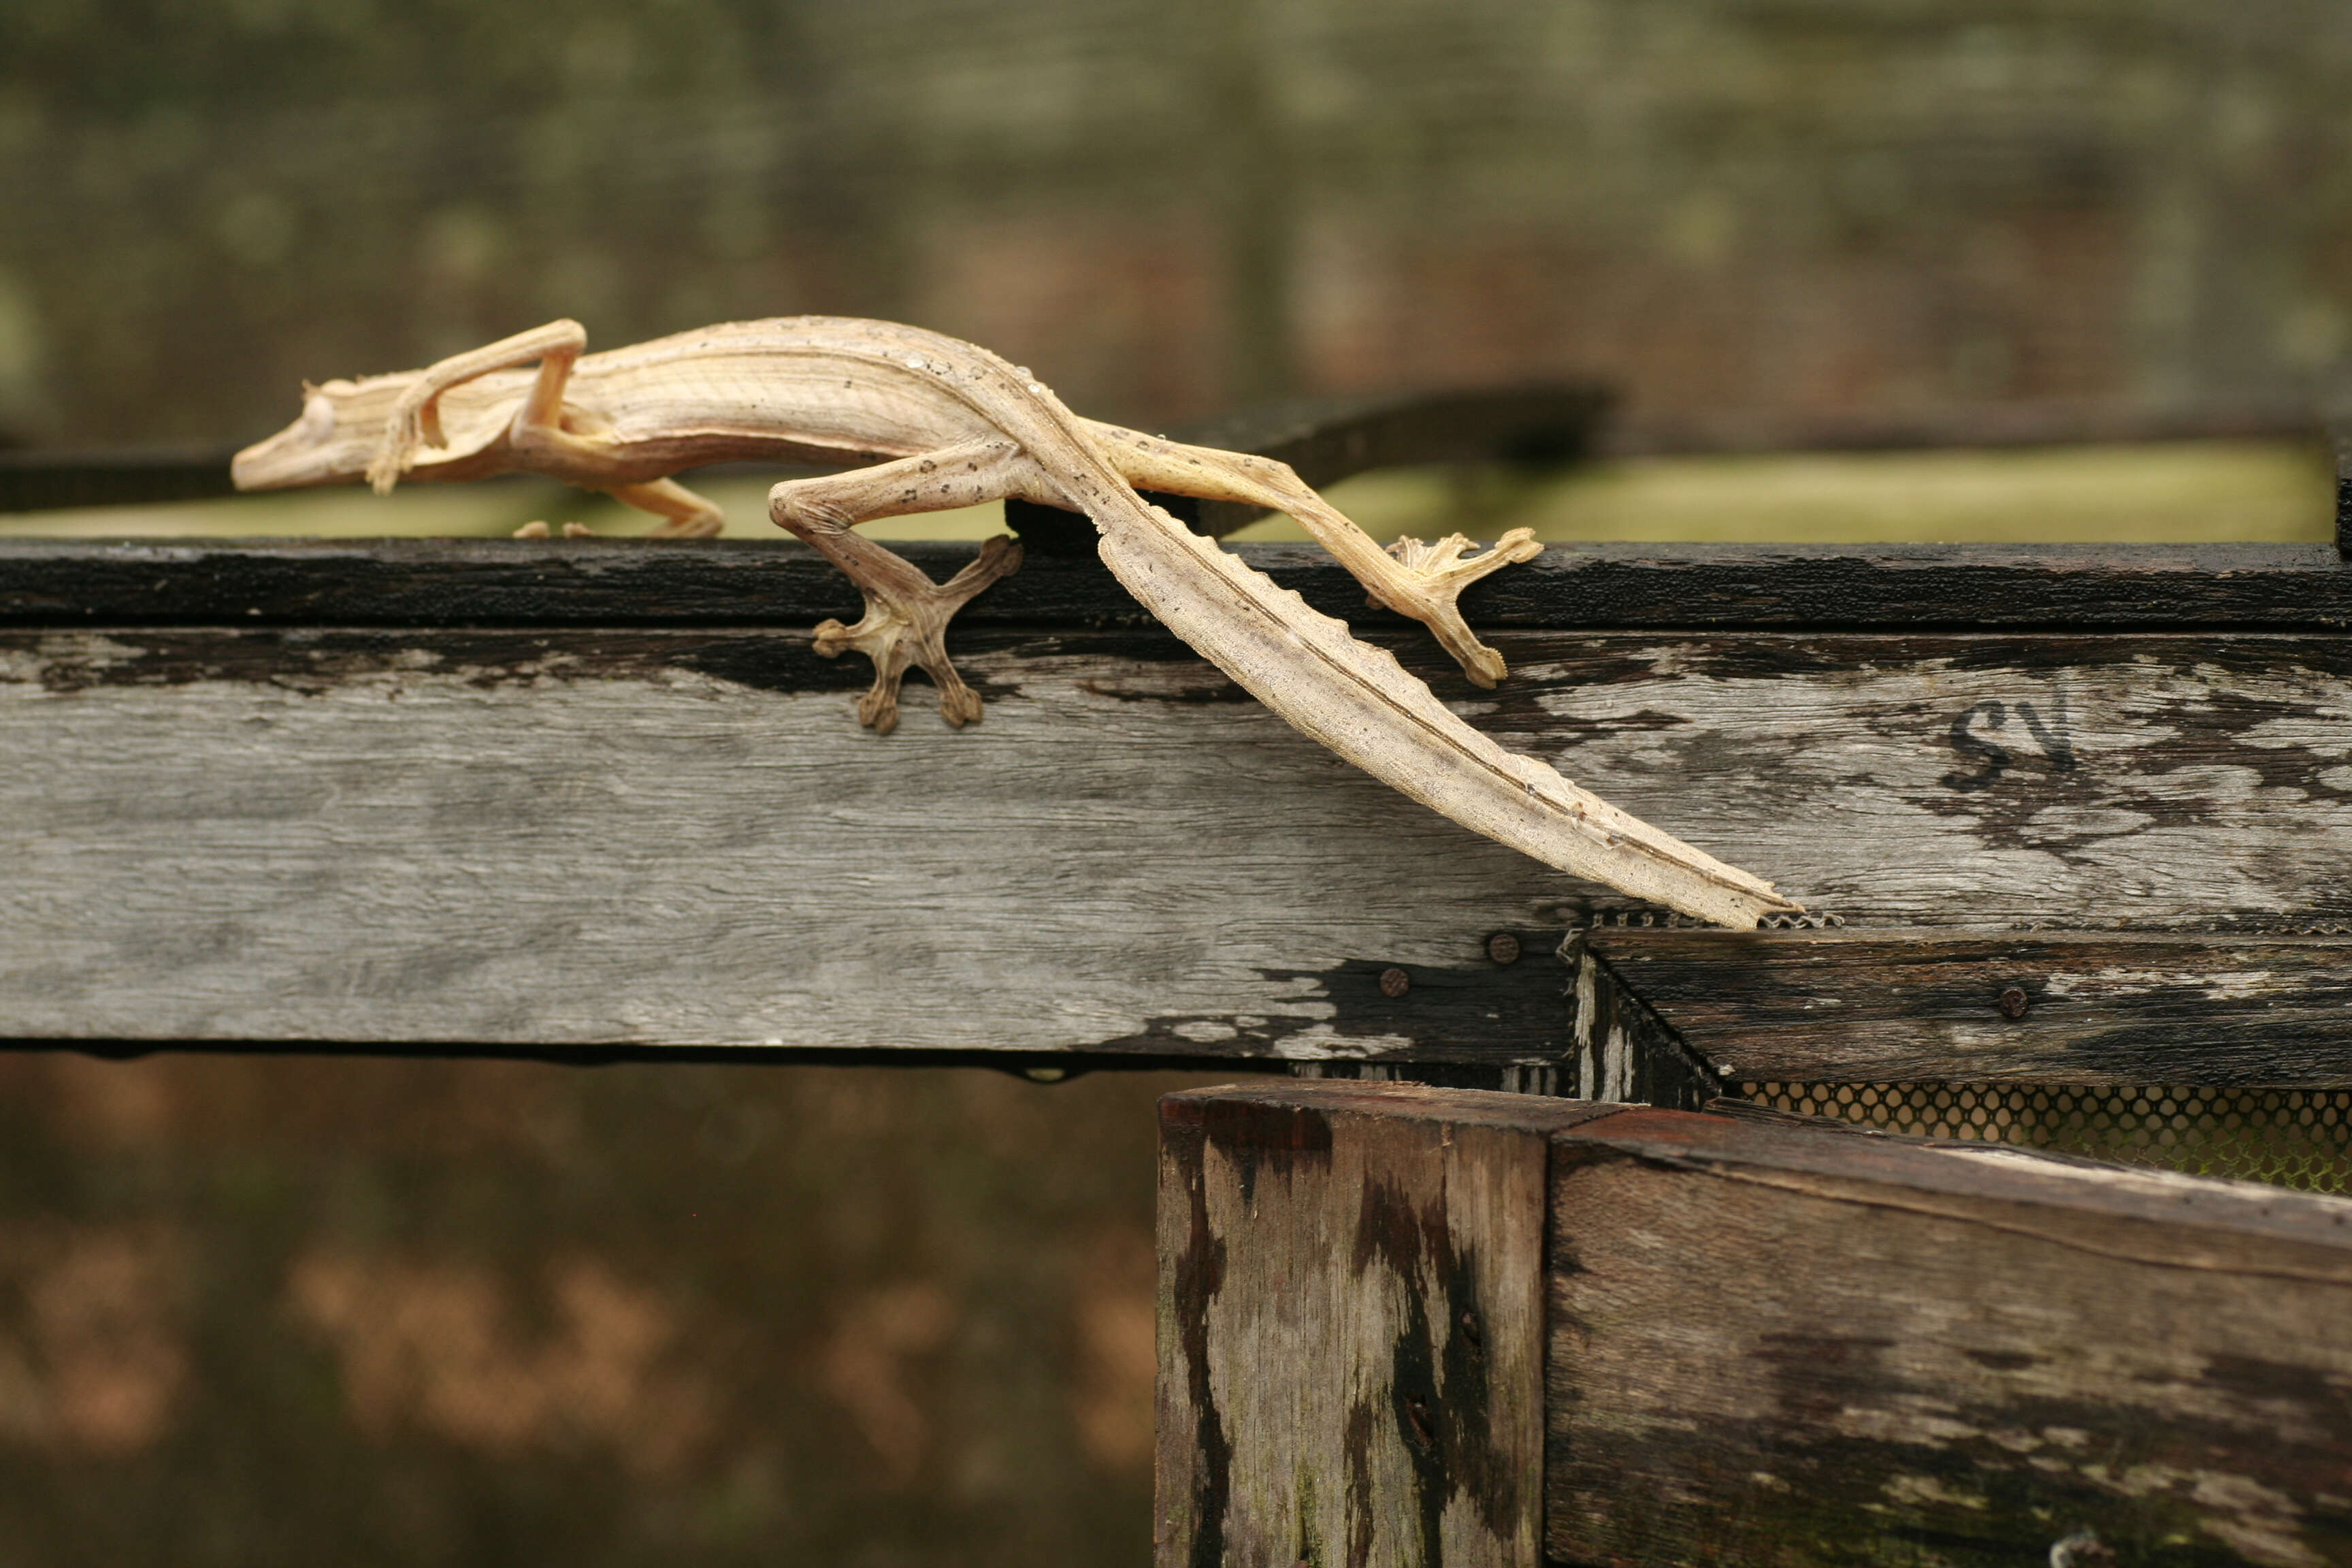 Image of Flat-tail geckos